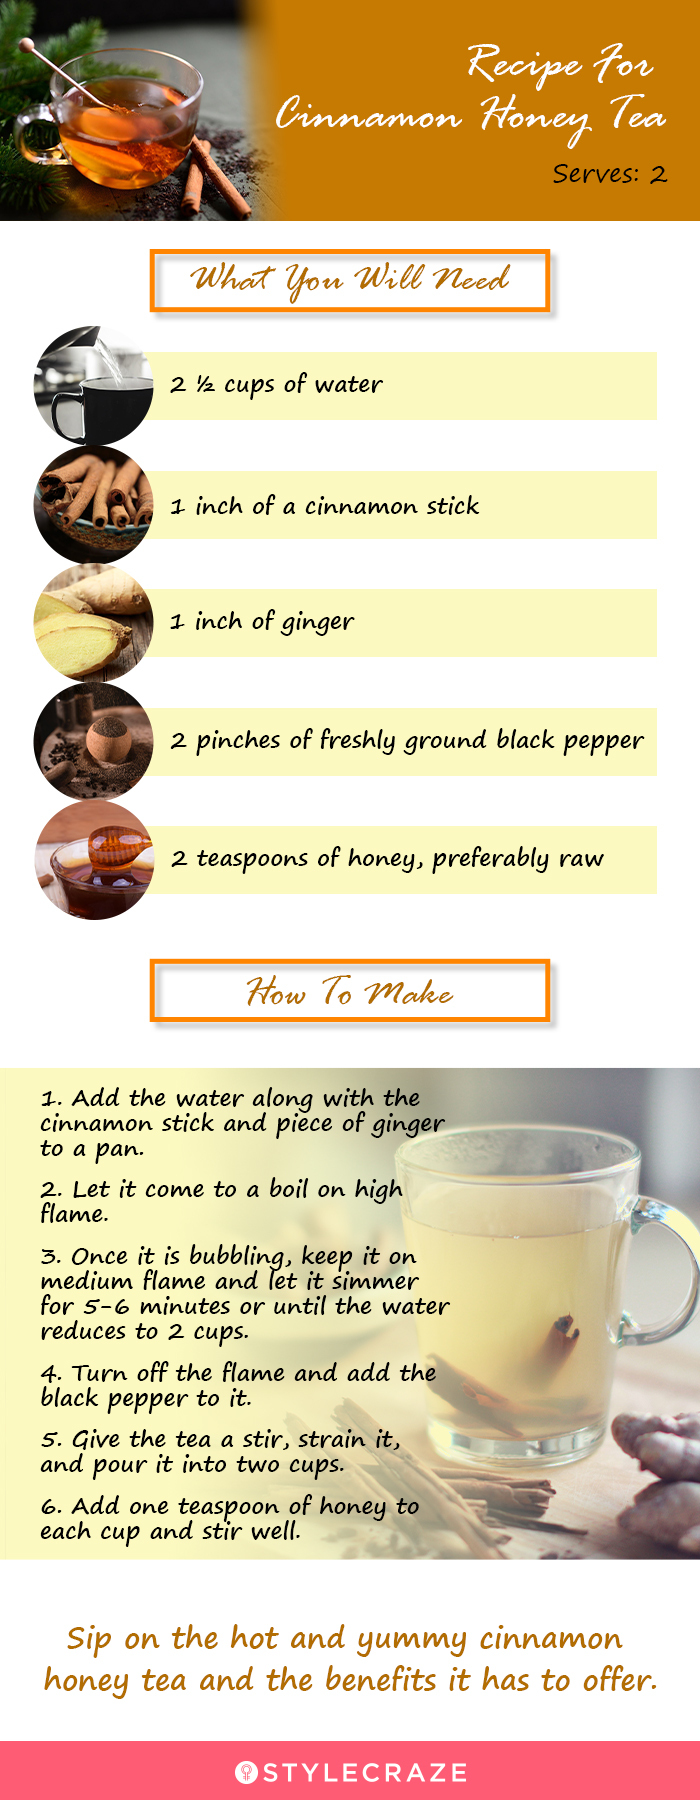 recipe for cinnamon honey tea [infographic]